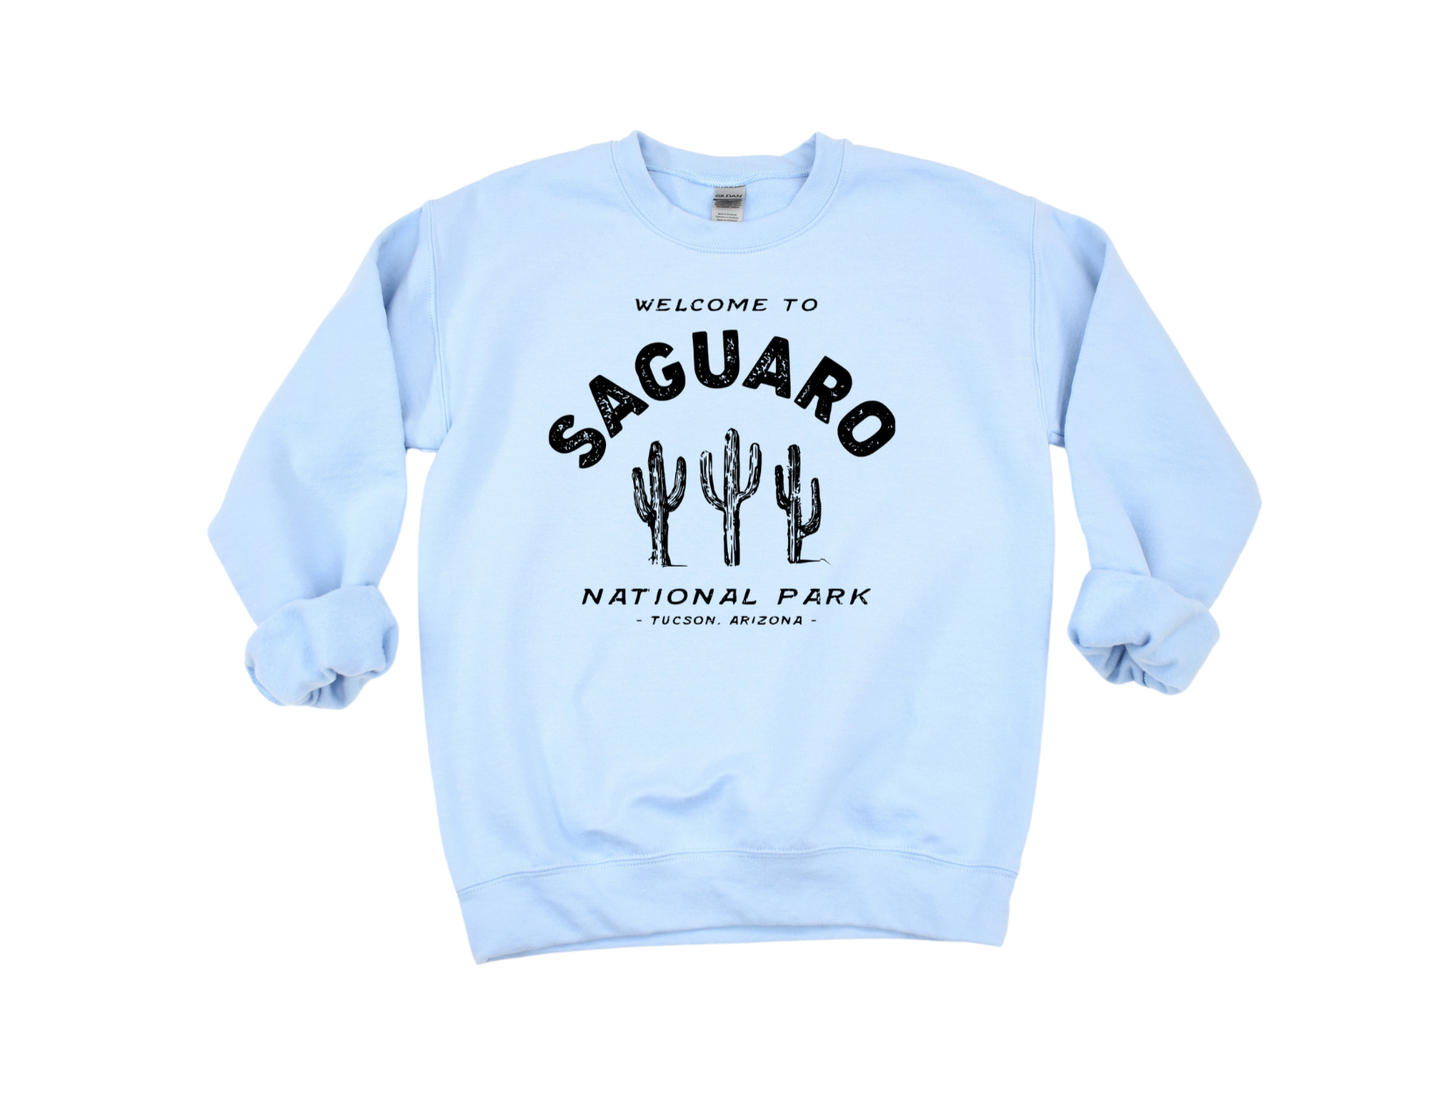 Saguaro National Park Unisex Sweatshirt